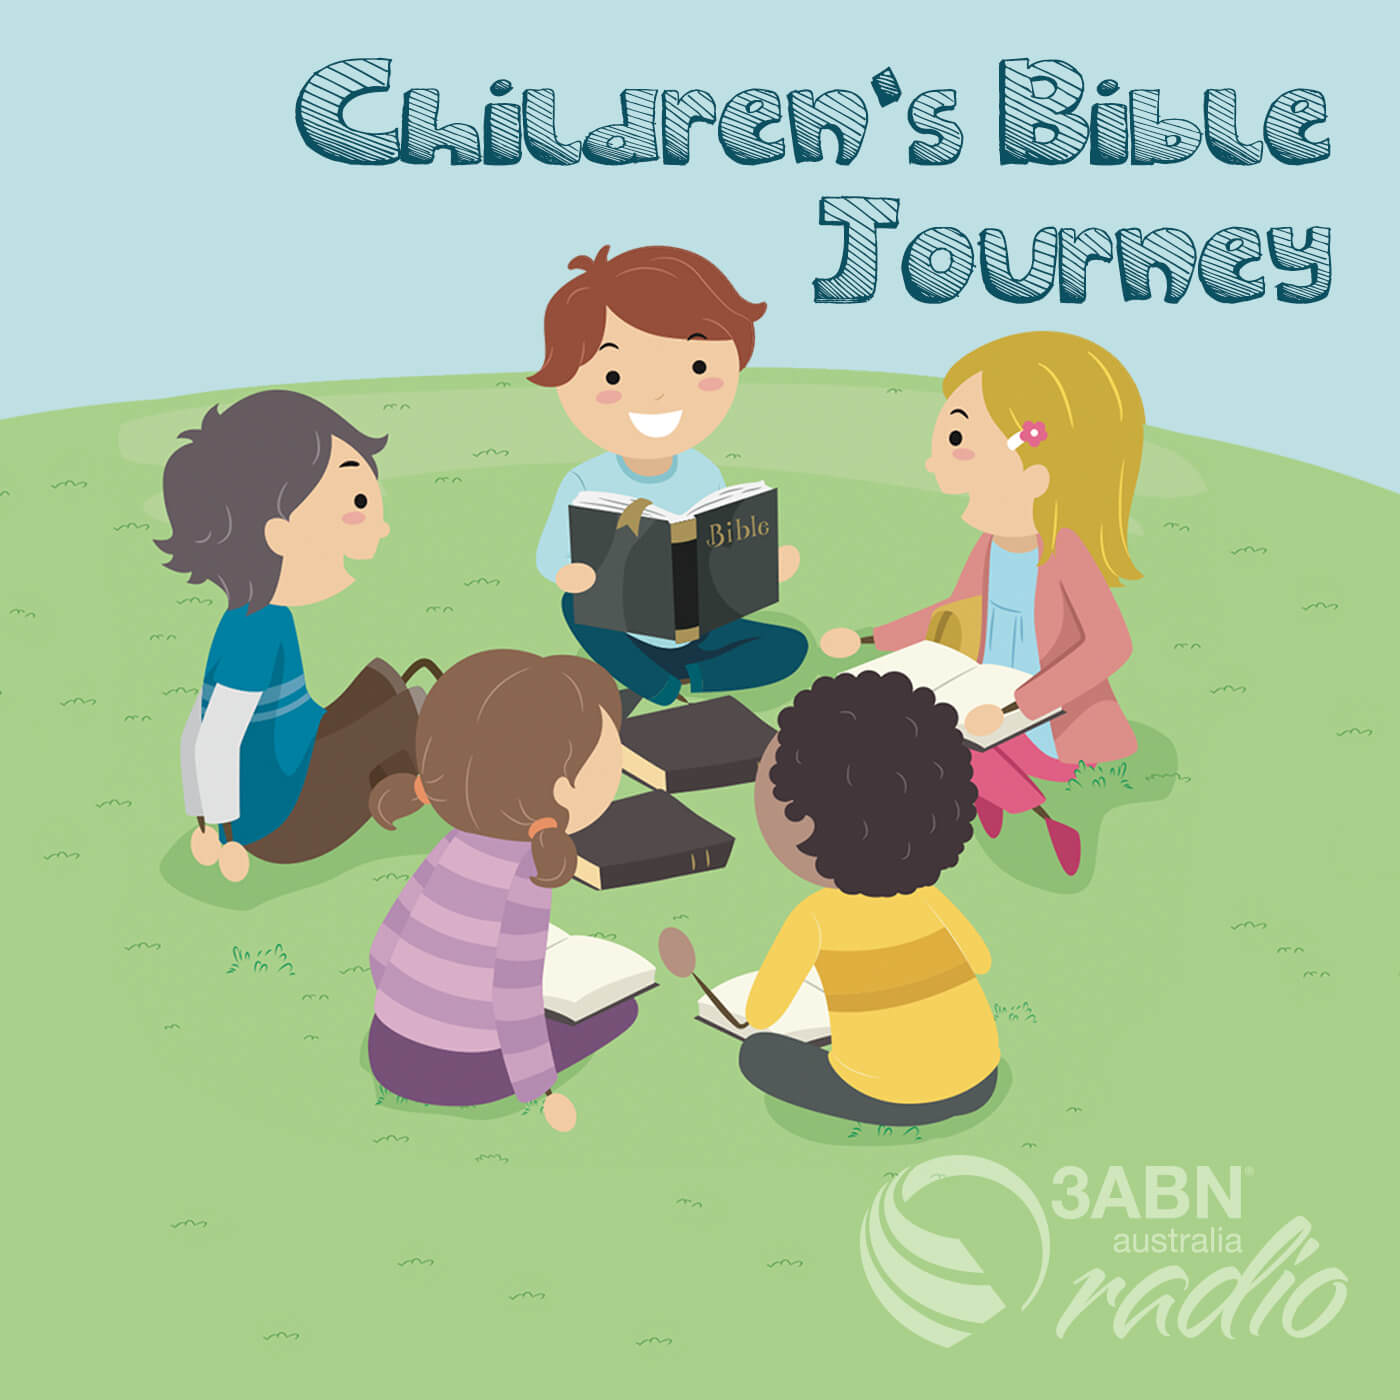 Children's Bible Journey - 2203